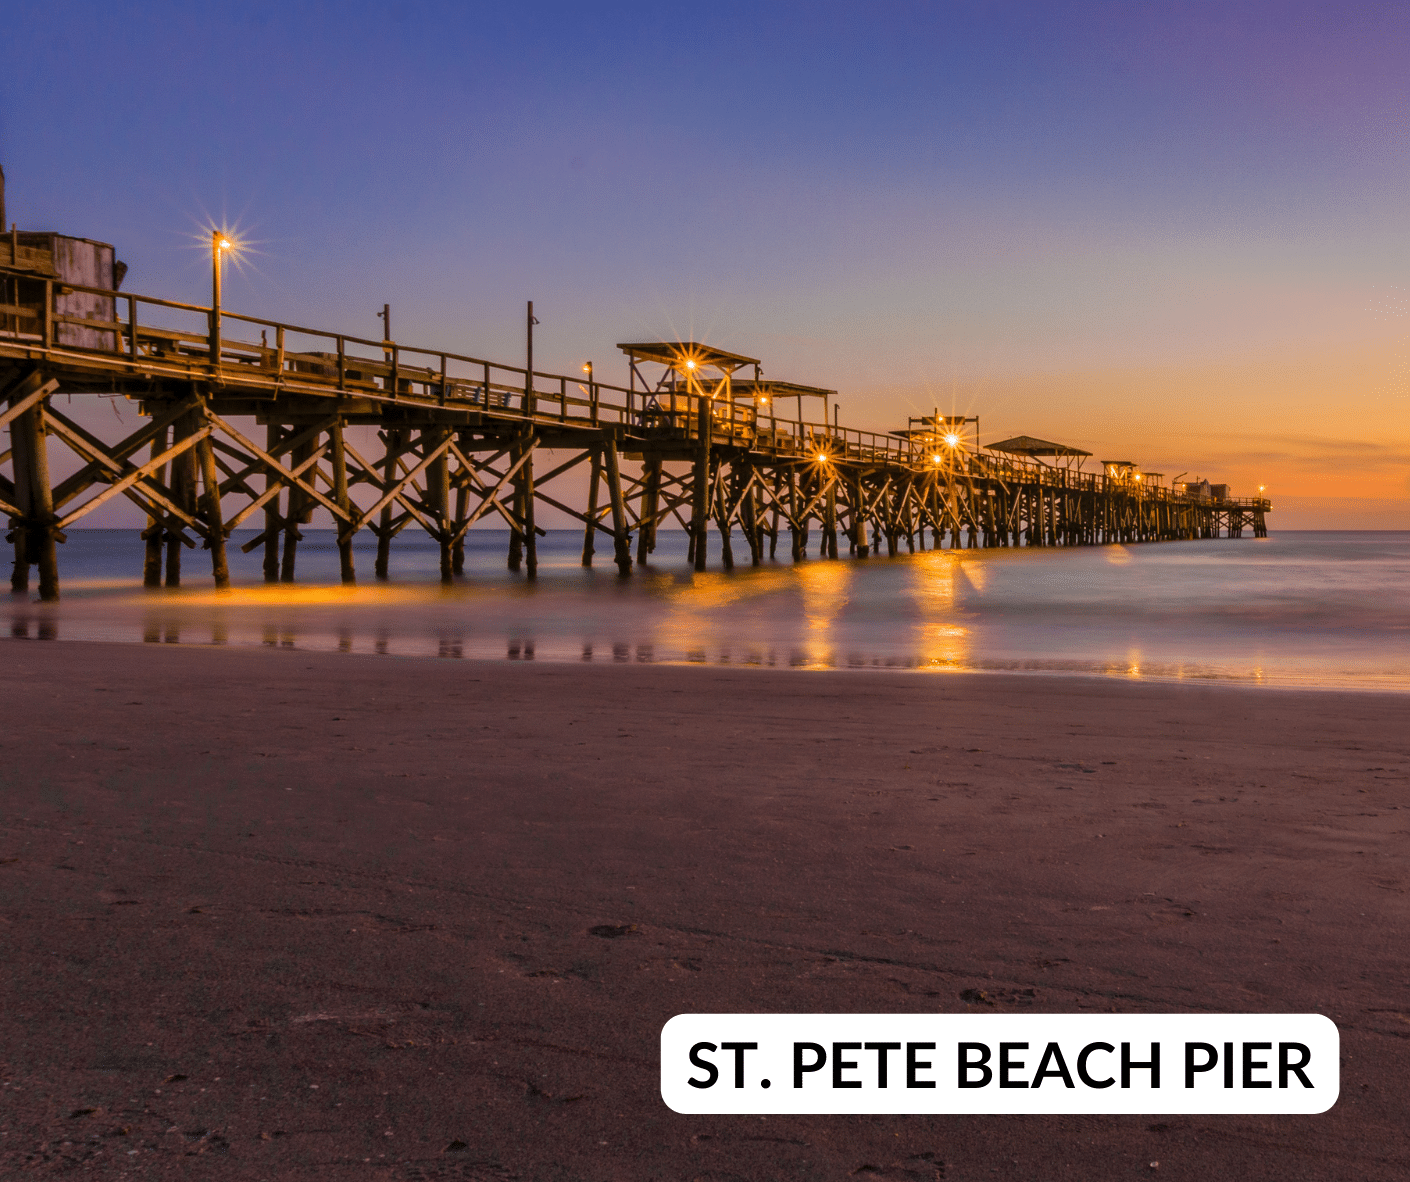 St. Pete Beach Pier at sunset 